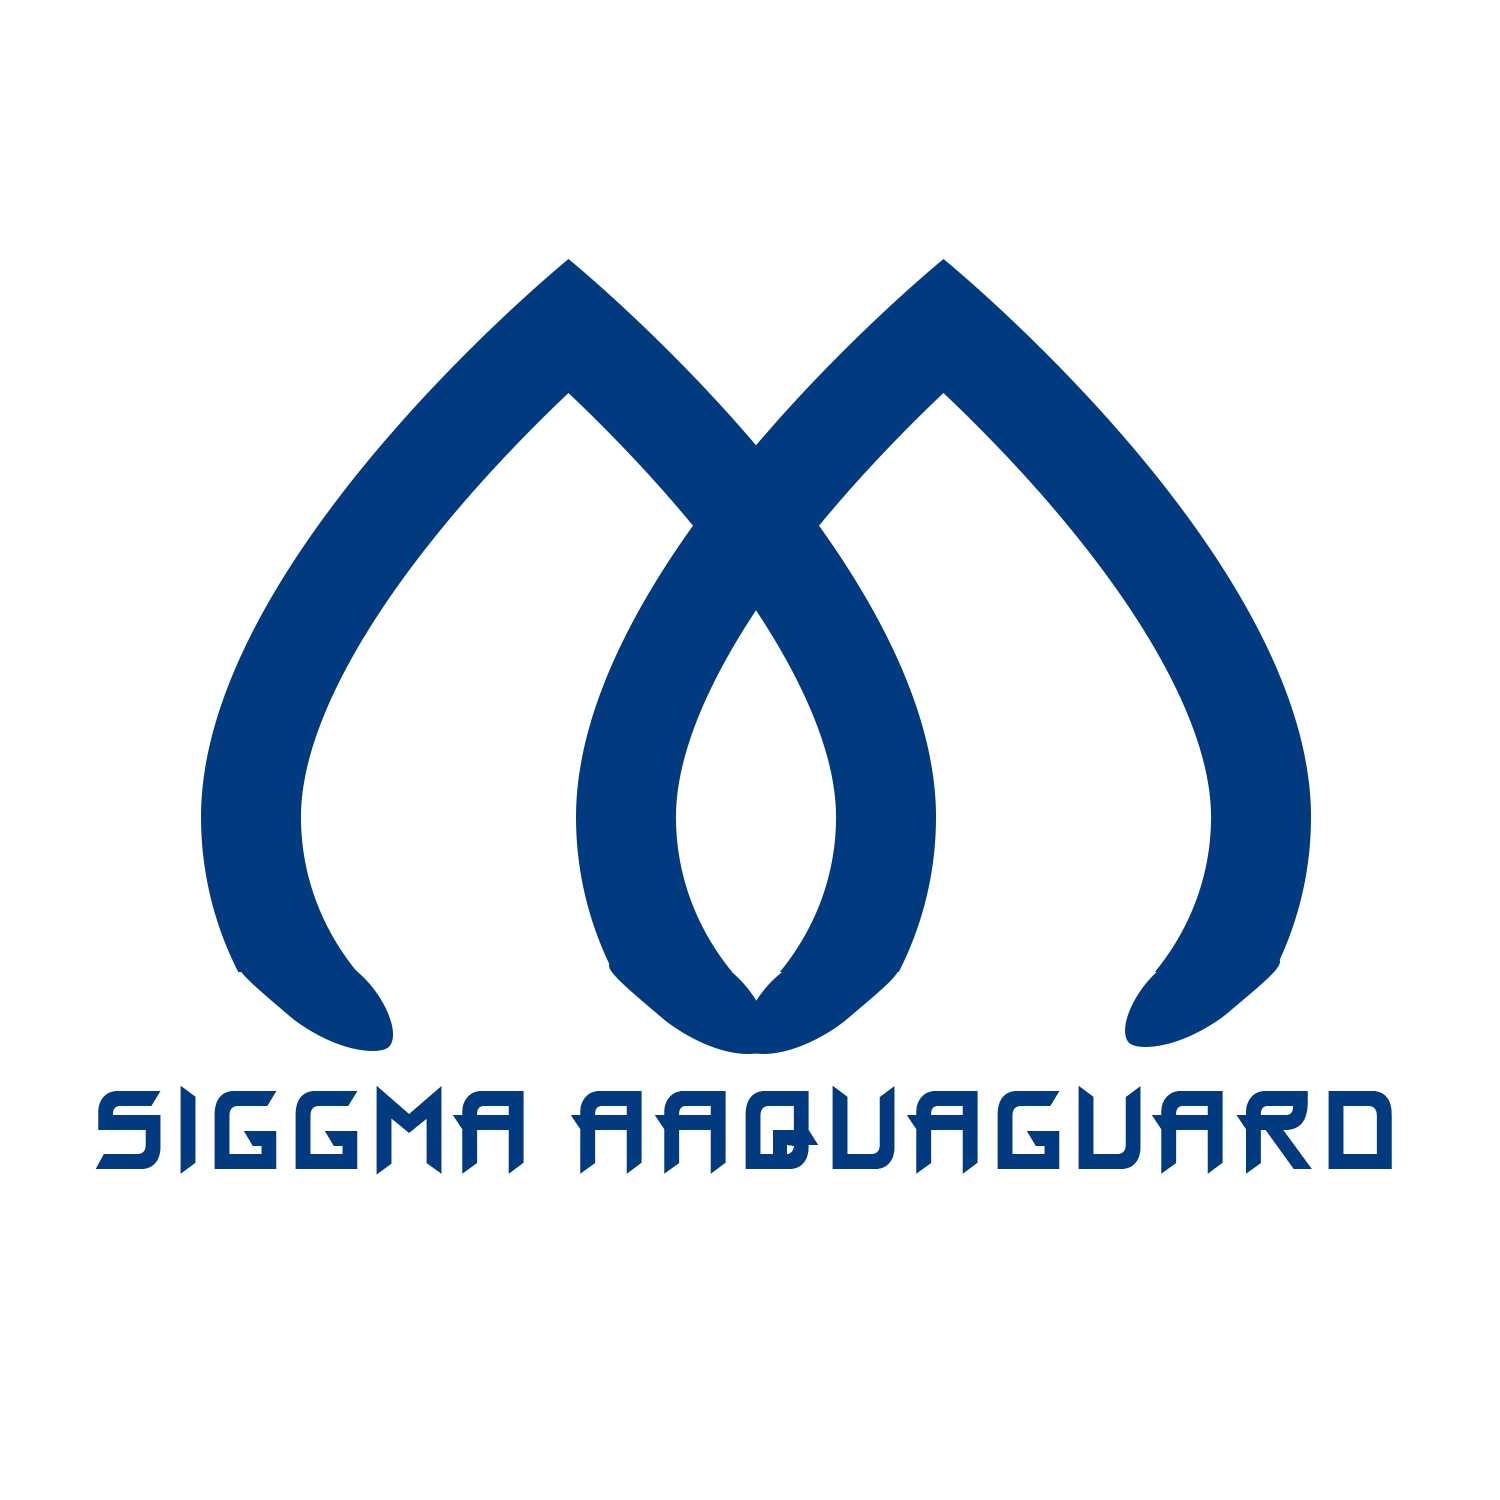 Sigma Aquaguard